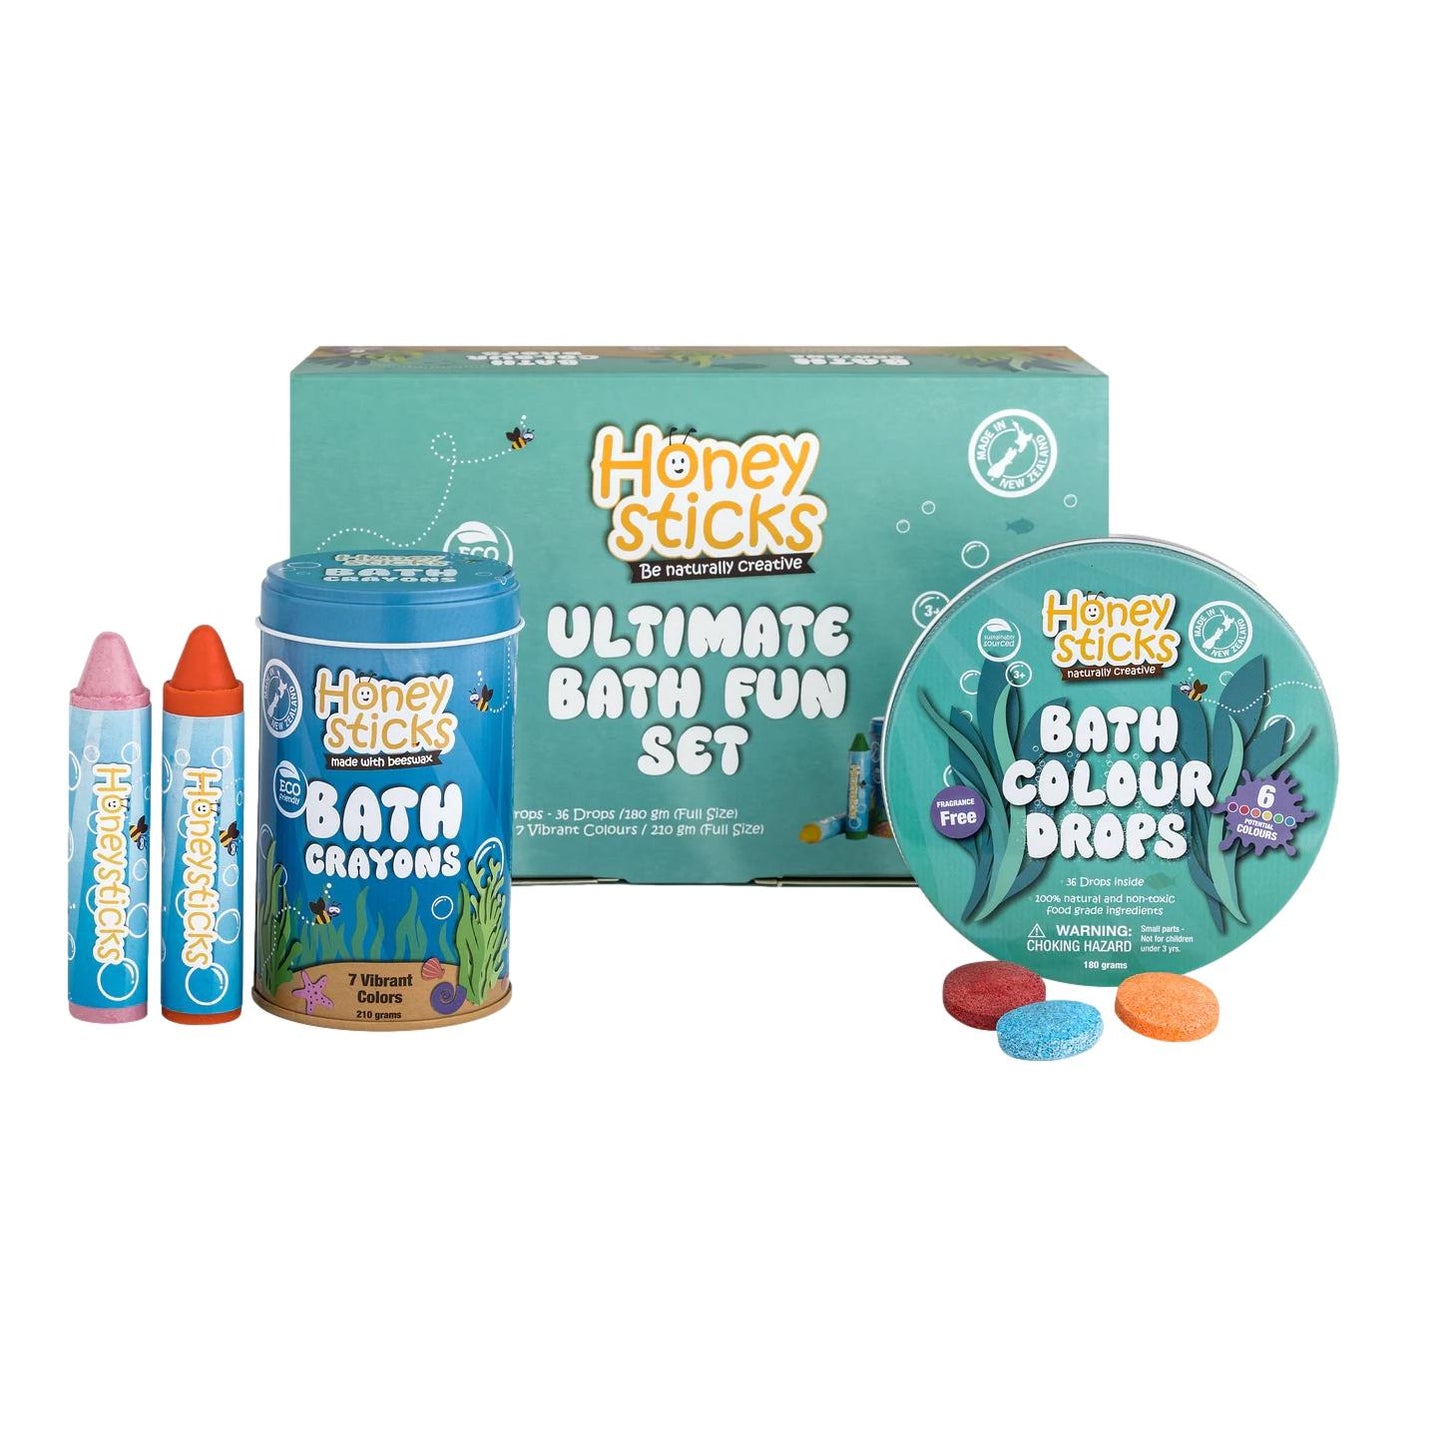 Honeysticks Bath Drops - Challenge & Fun, Inc.